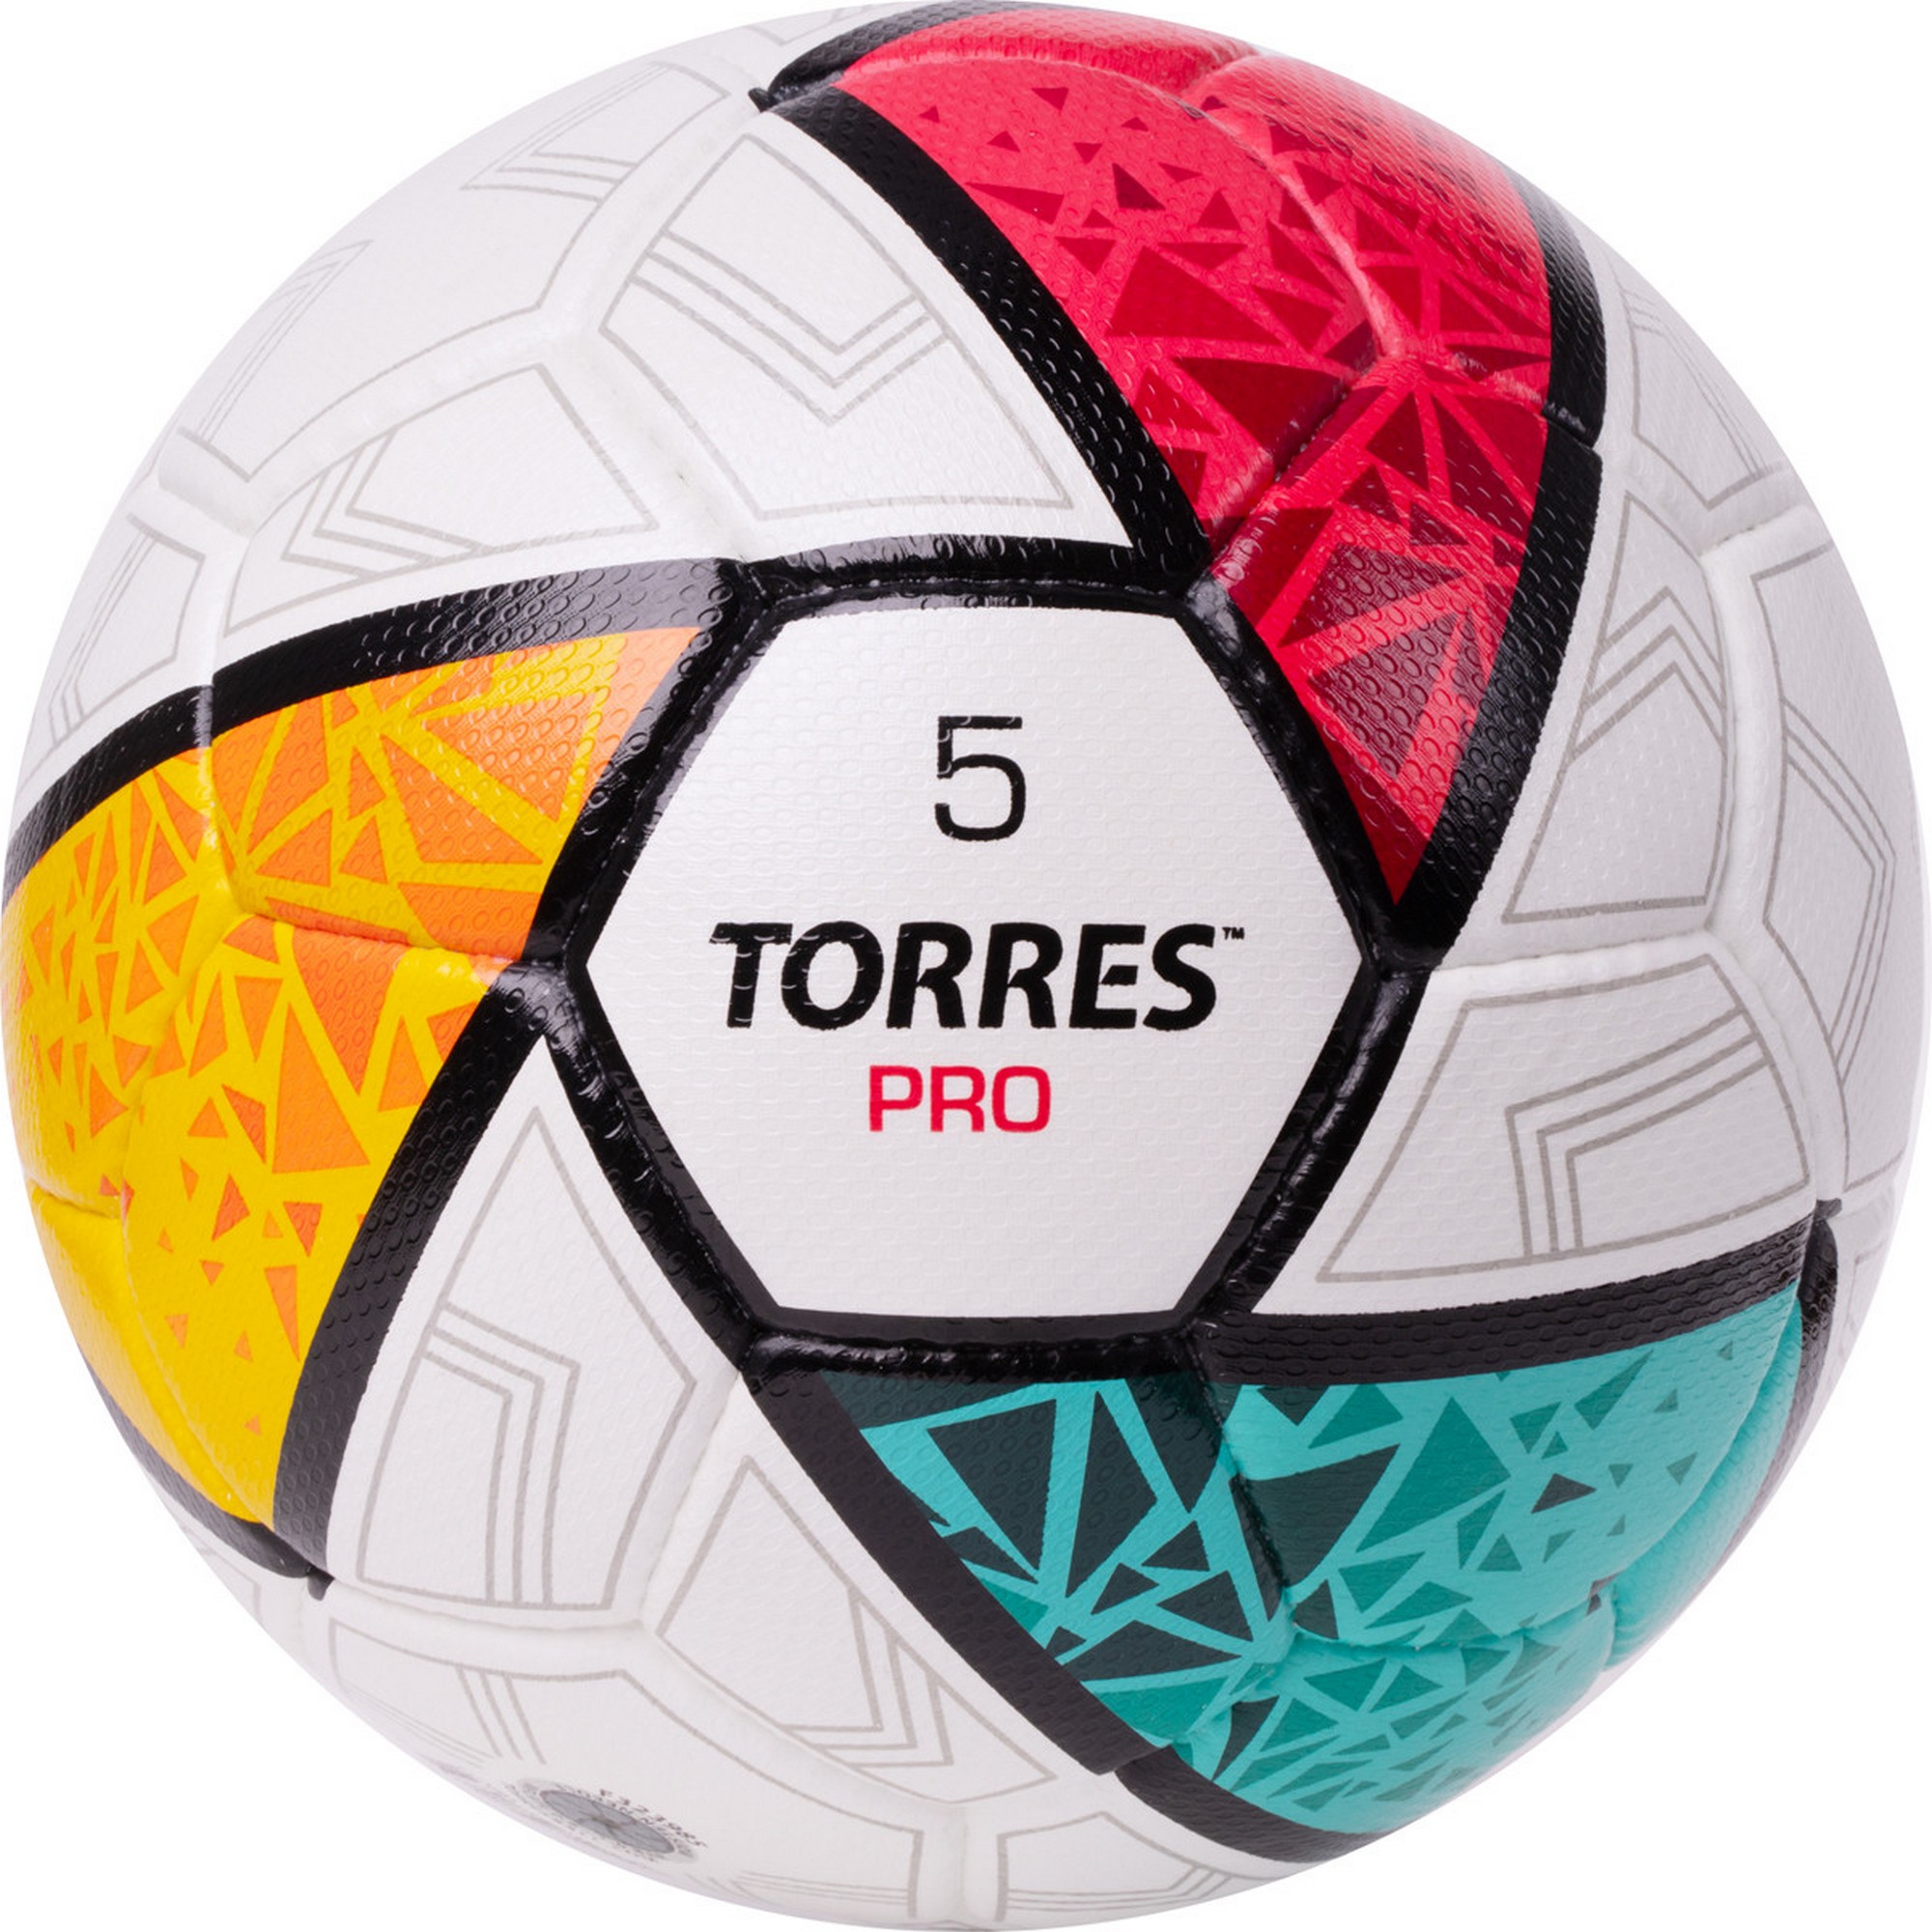   Torres Pro F323985 .5